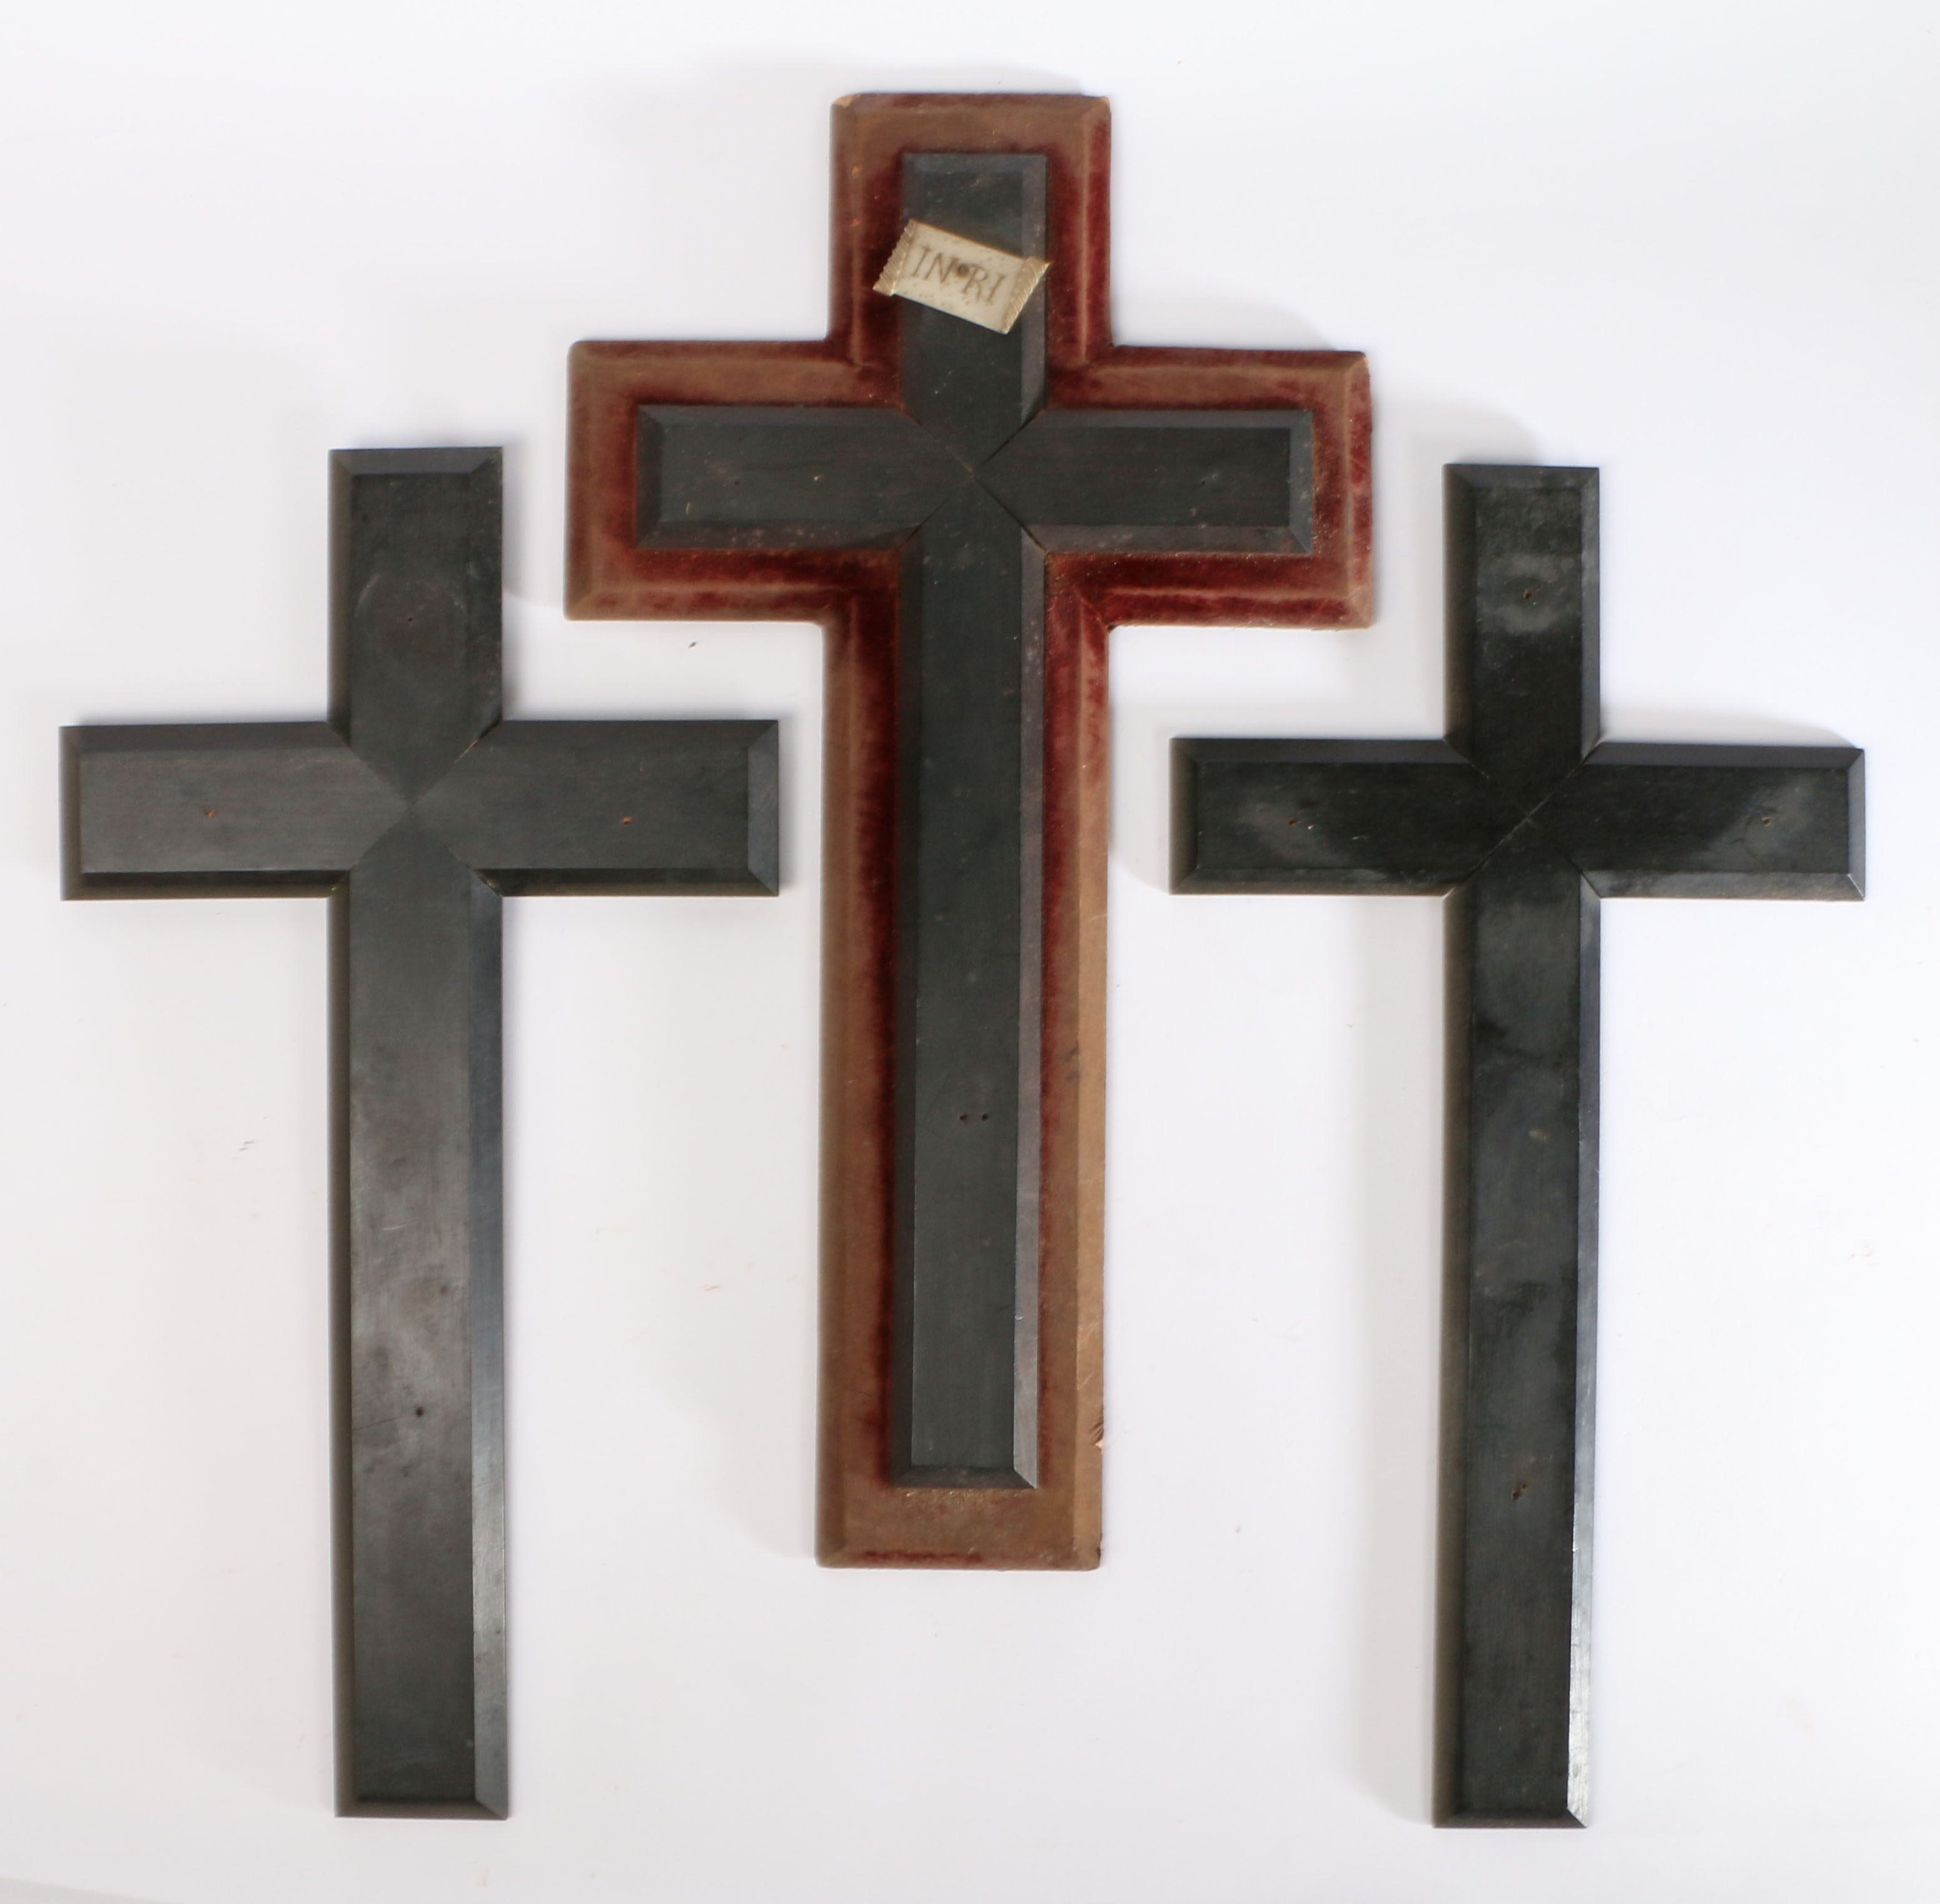 Three 19th century ebonised crosses, one having an "Emile Bouasse Jeune" label the reverse, the